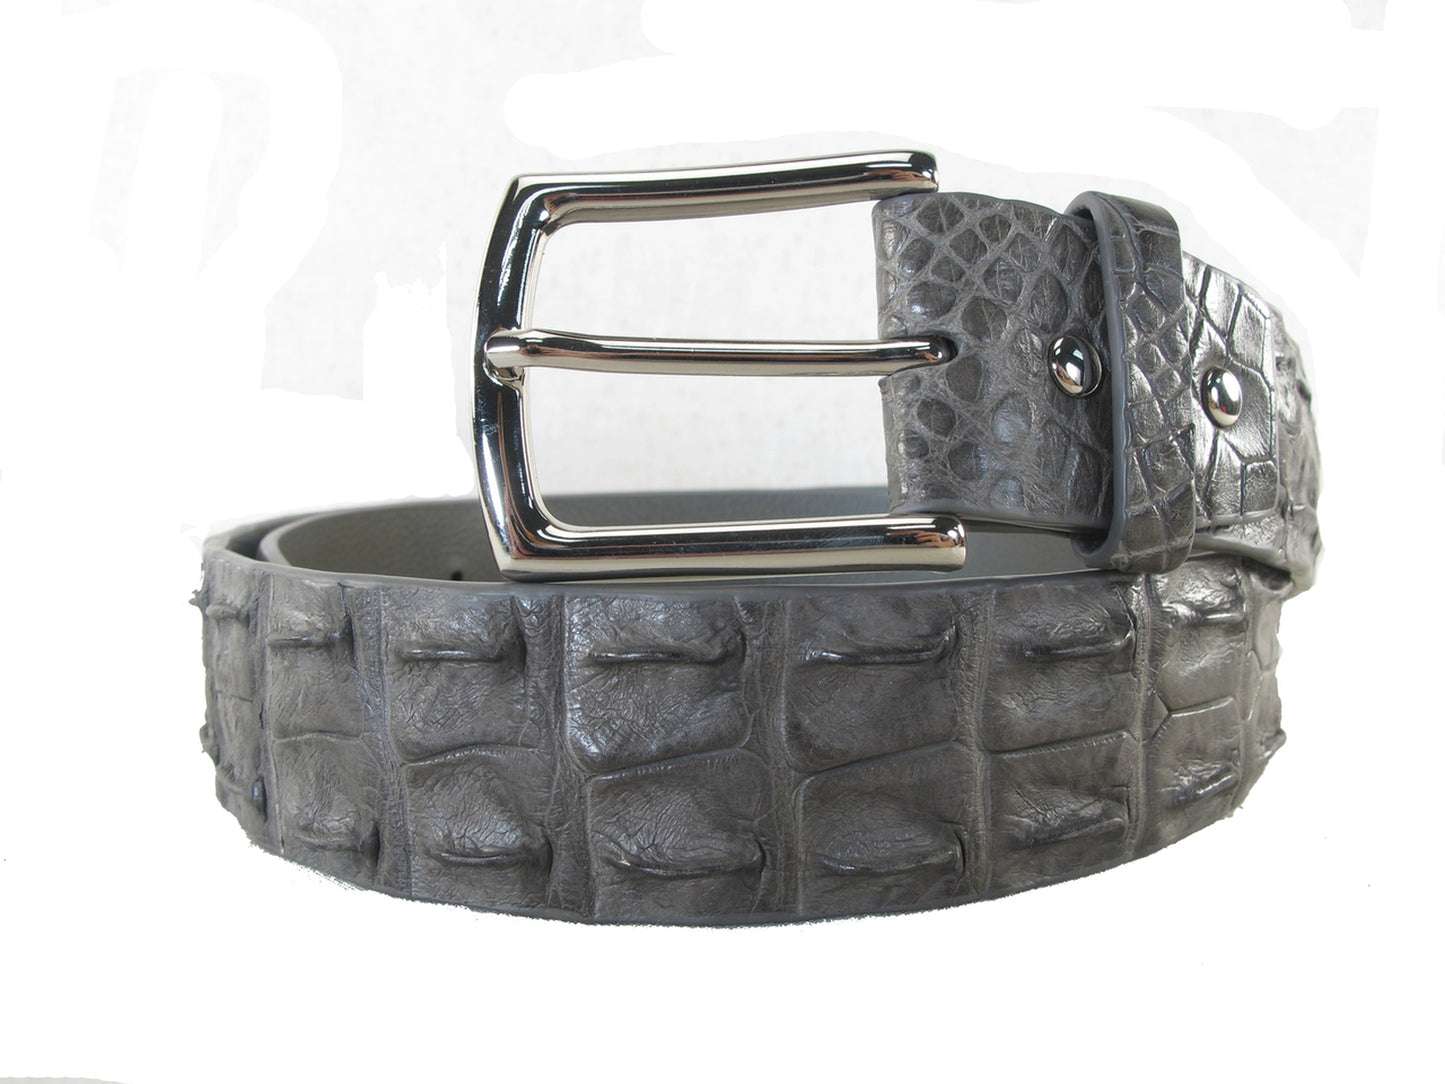 Genuine Crocodile Double Hornback Skin Leather Luxury Casual Men's Belt